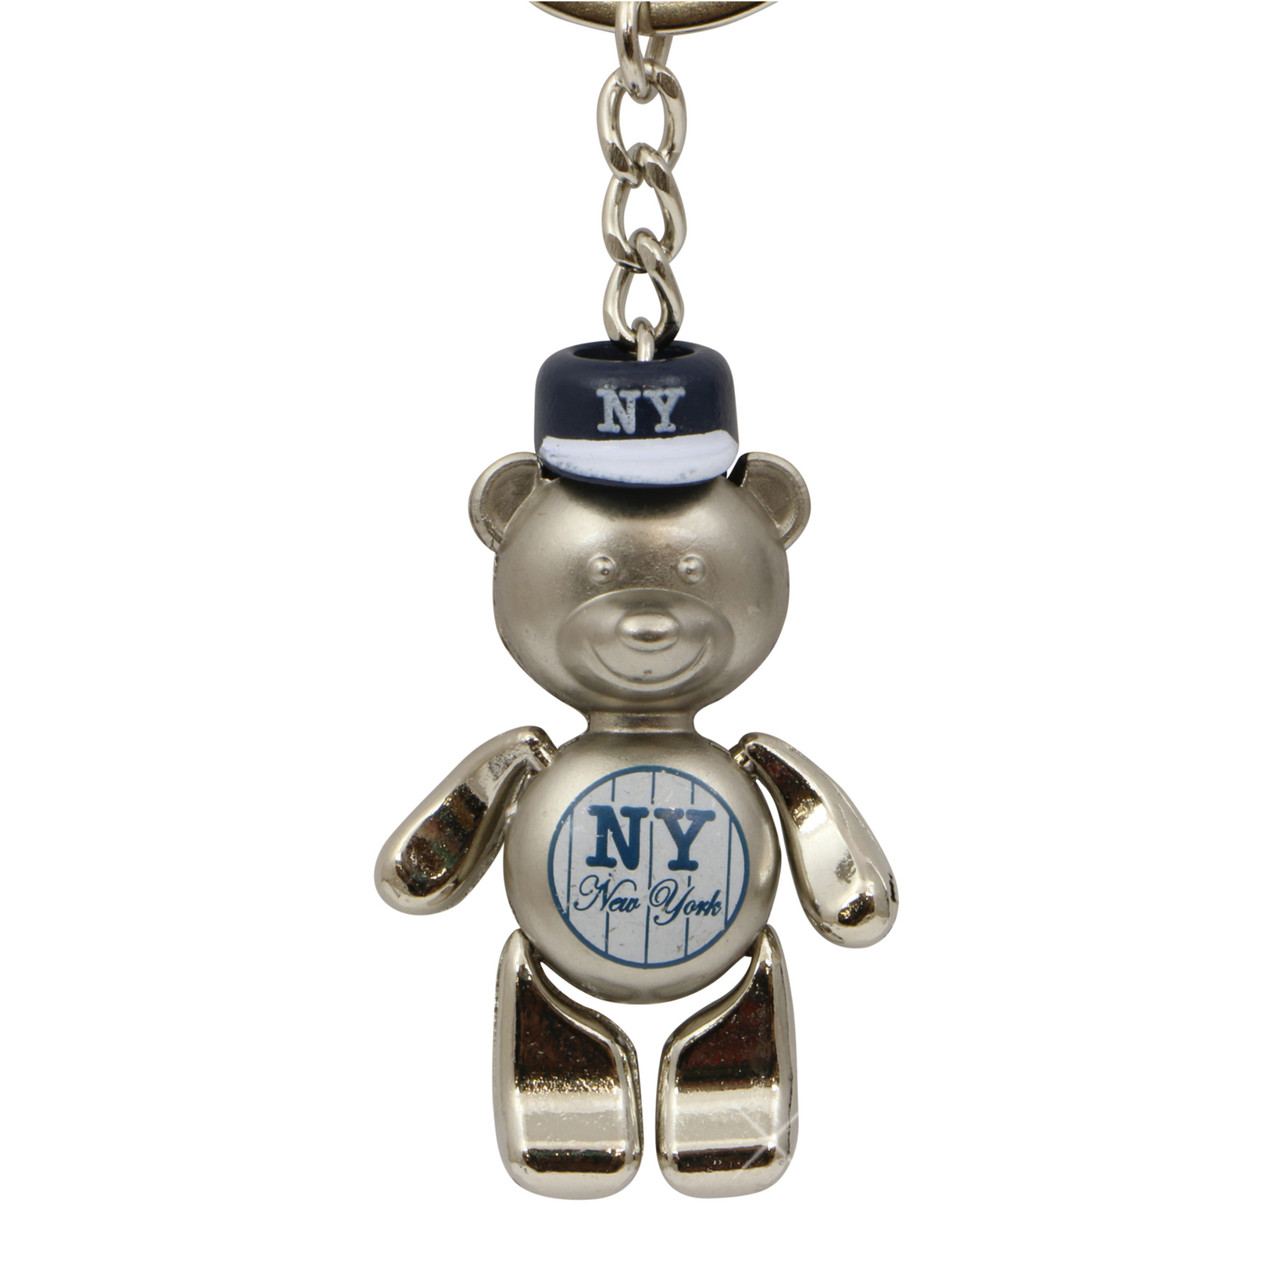 Metal NY Baseball Teddy Bear Key Chain